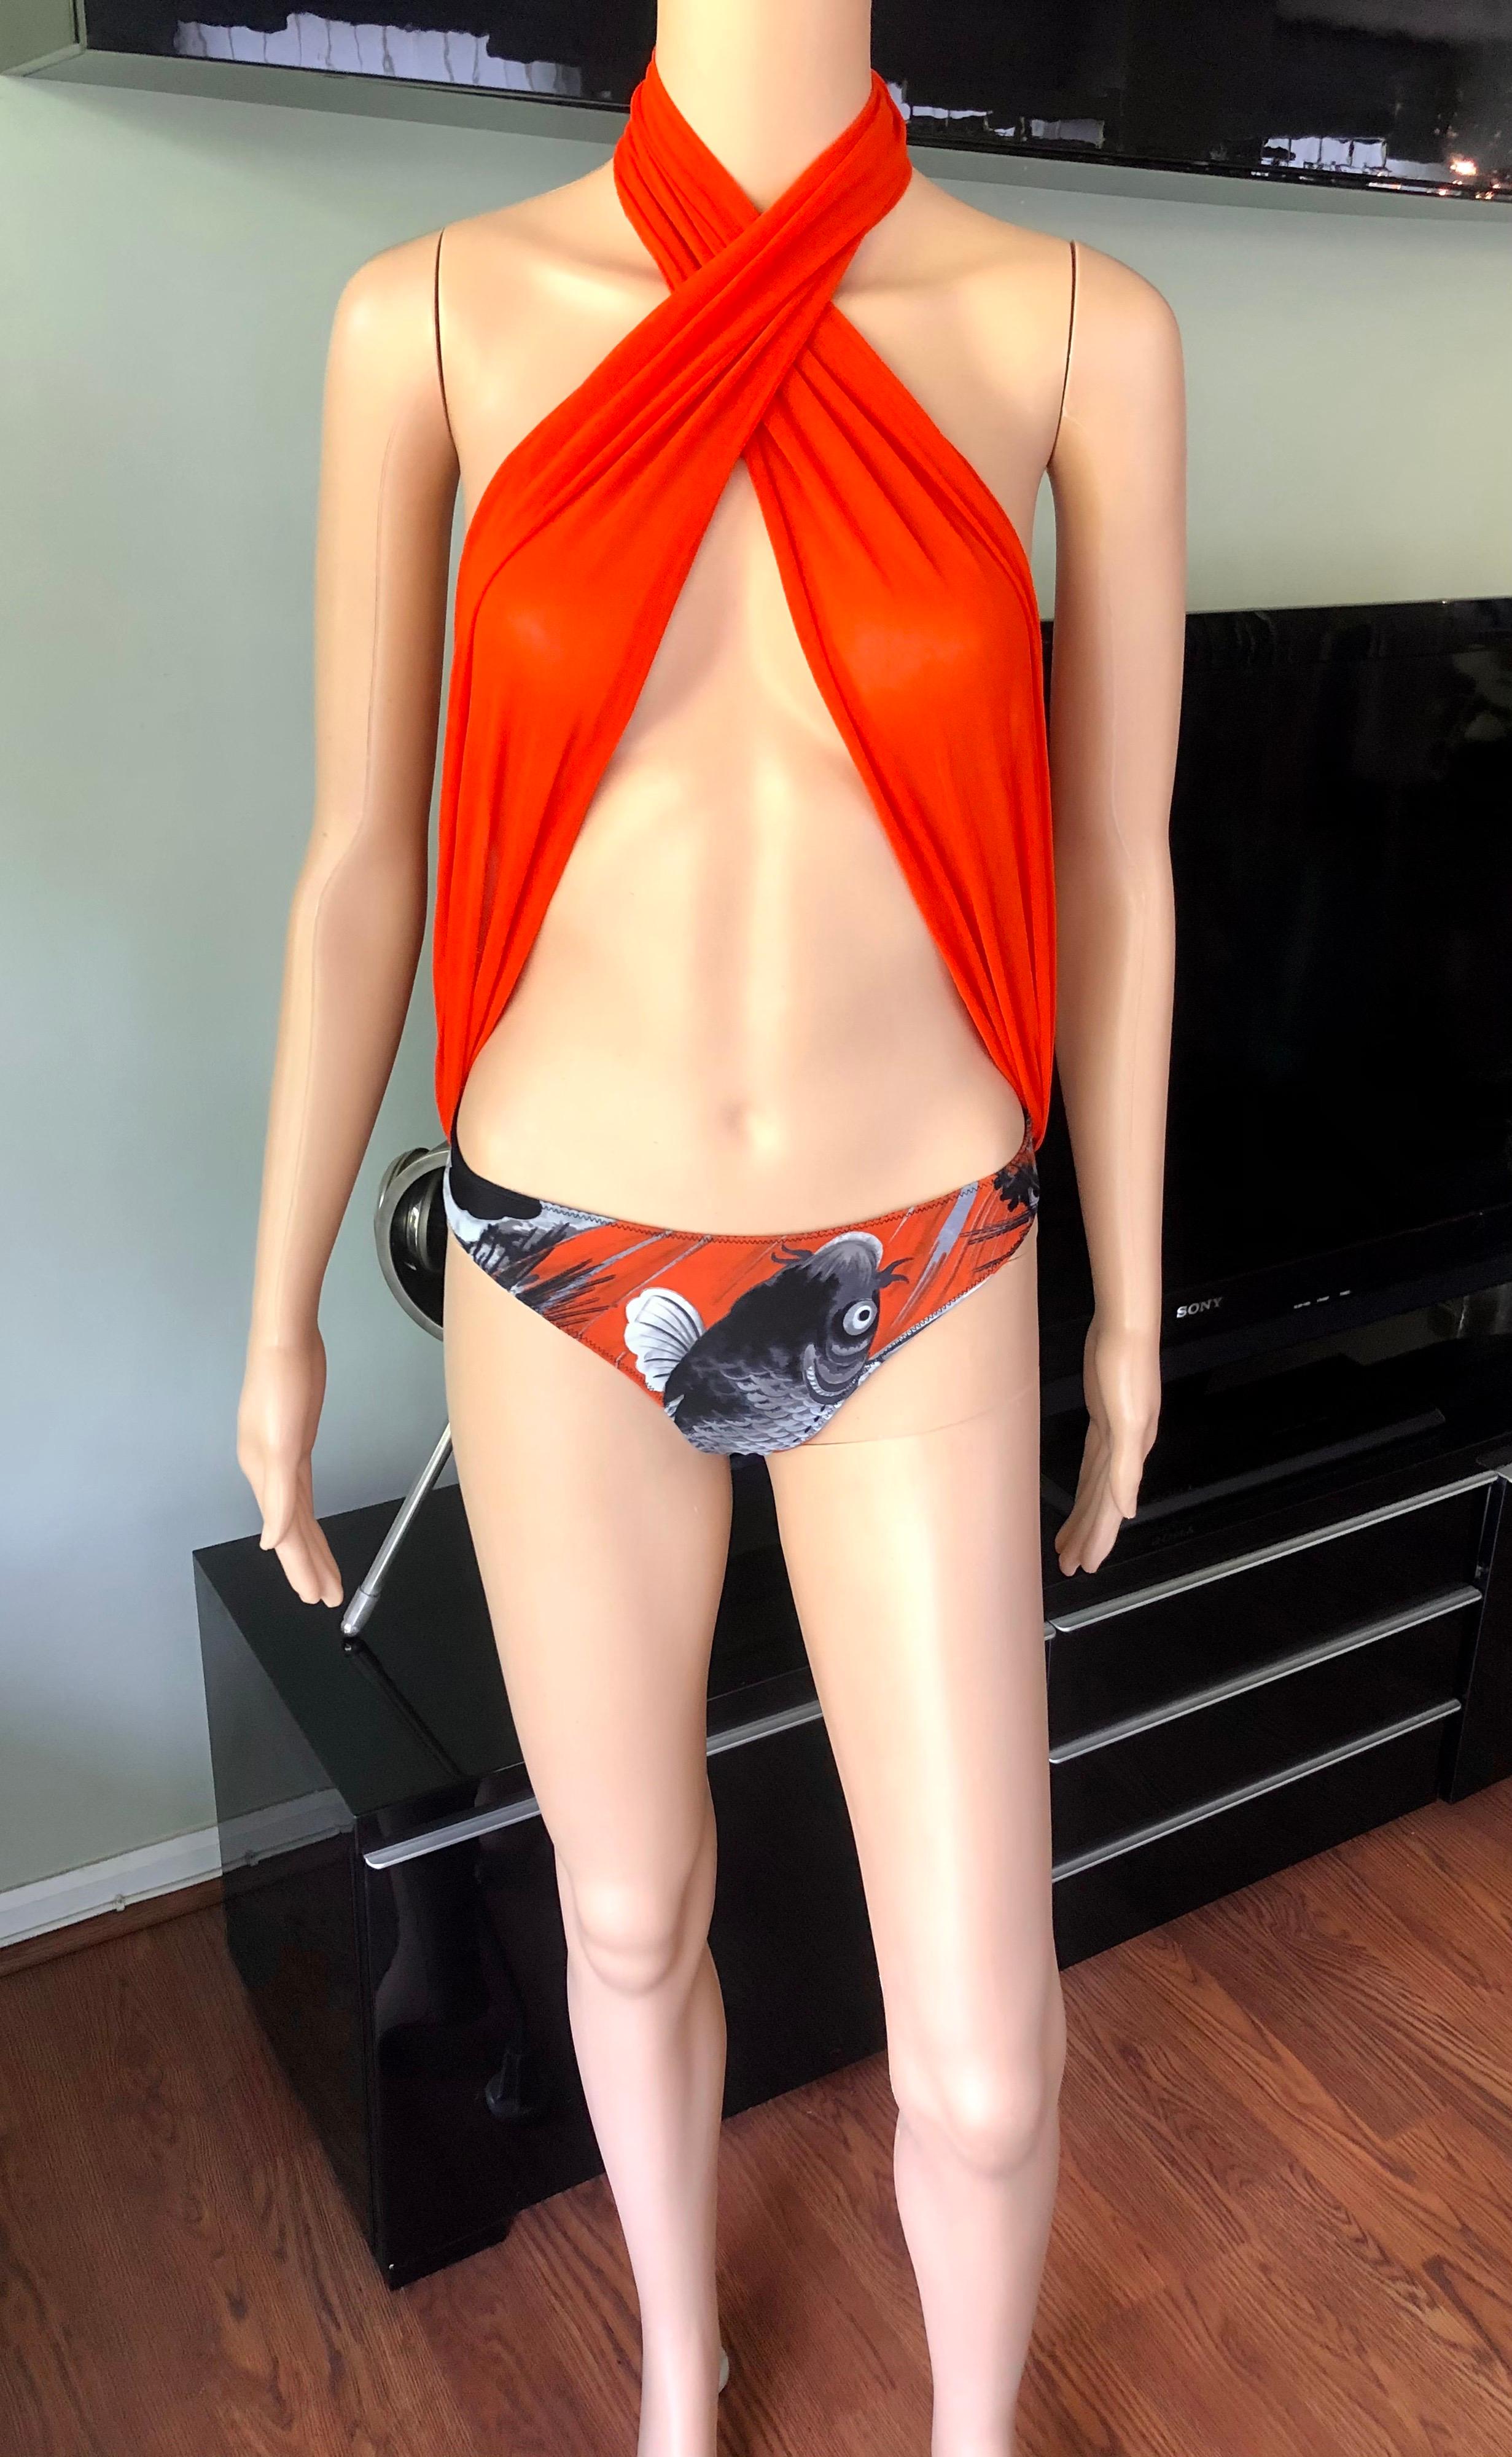 Jean Paul Gaultier Soleil Vintage Japanese Koi Fish Bikini Swimwear Swimsuit 2 Piece Set  IT 40

Condition is like new, no visible signs of wear.
